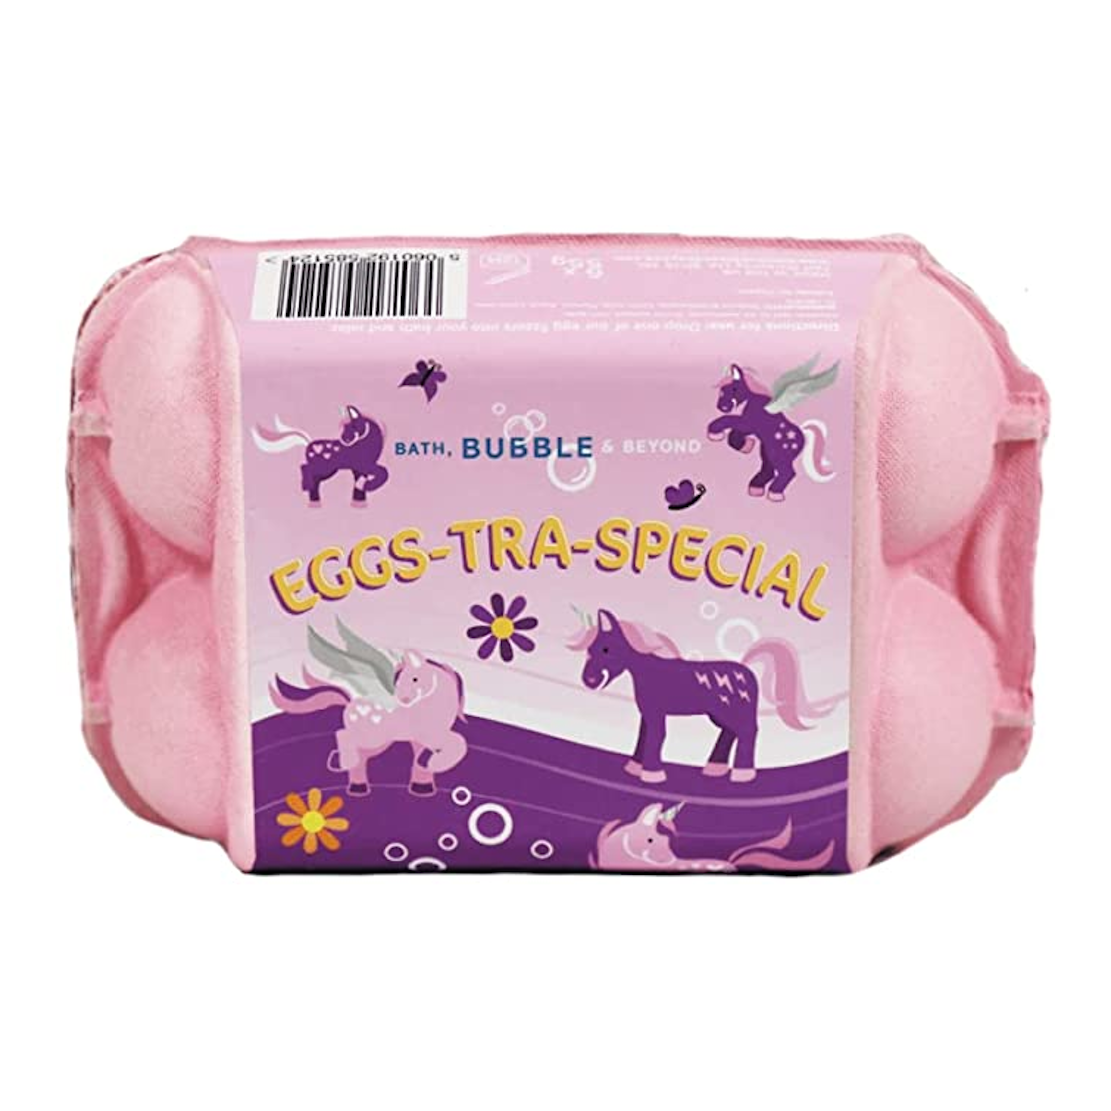 Bath Bubble and Beyond Eggs-Tra-Special Unicorn Eggs Bath Fizzers